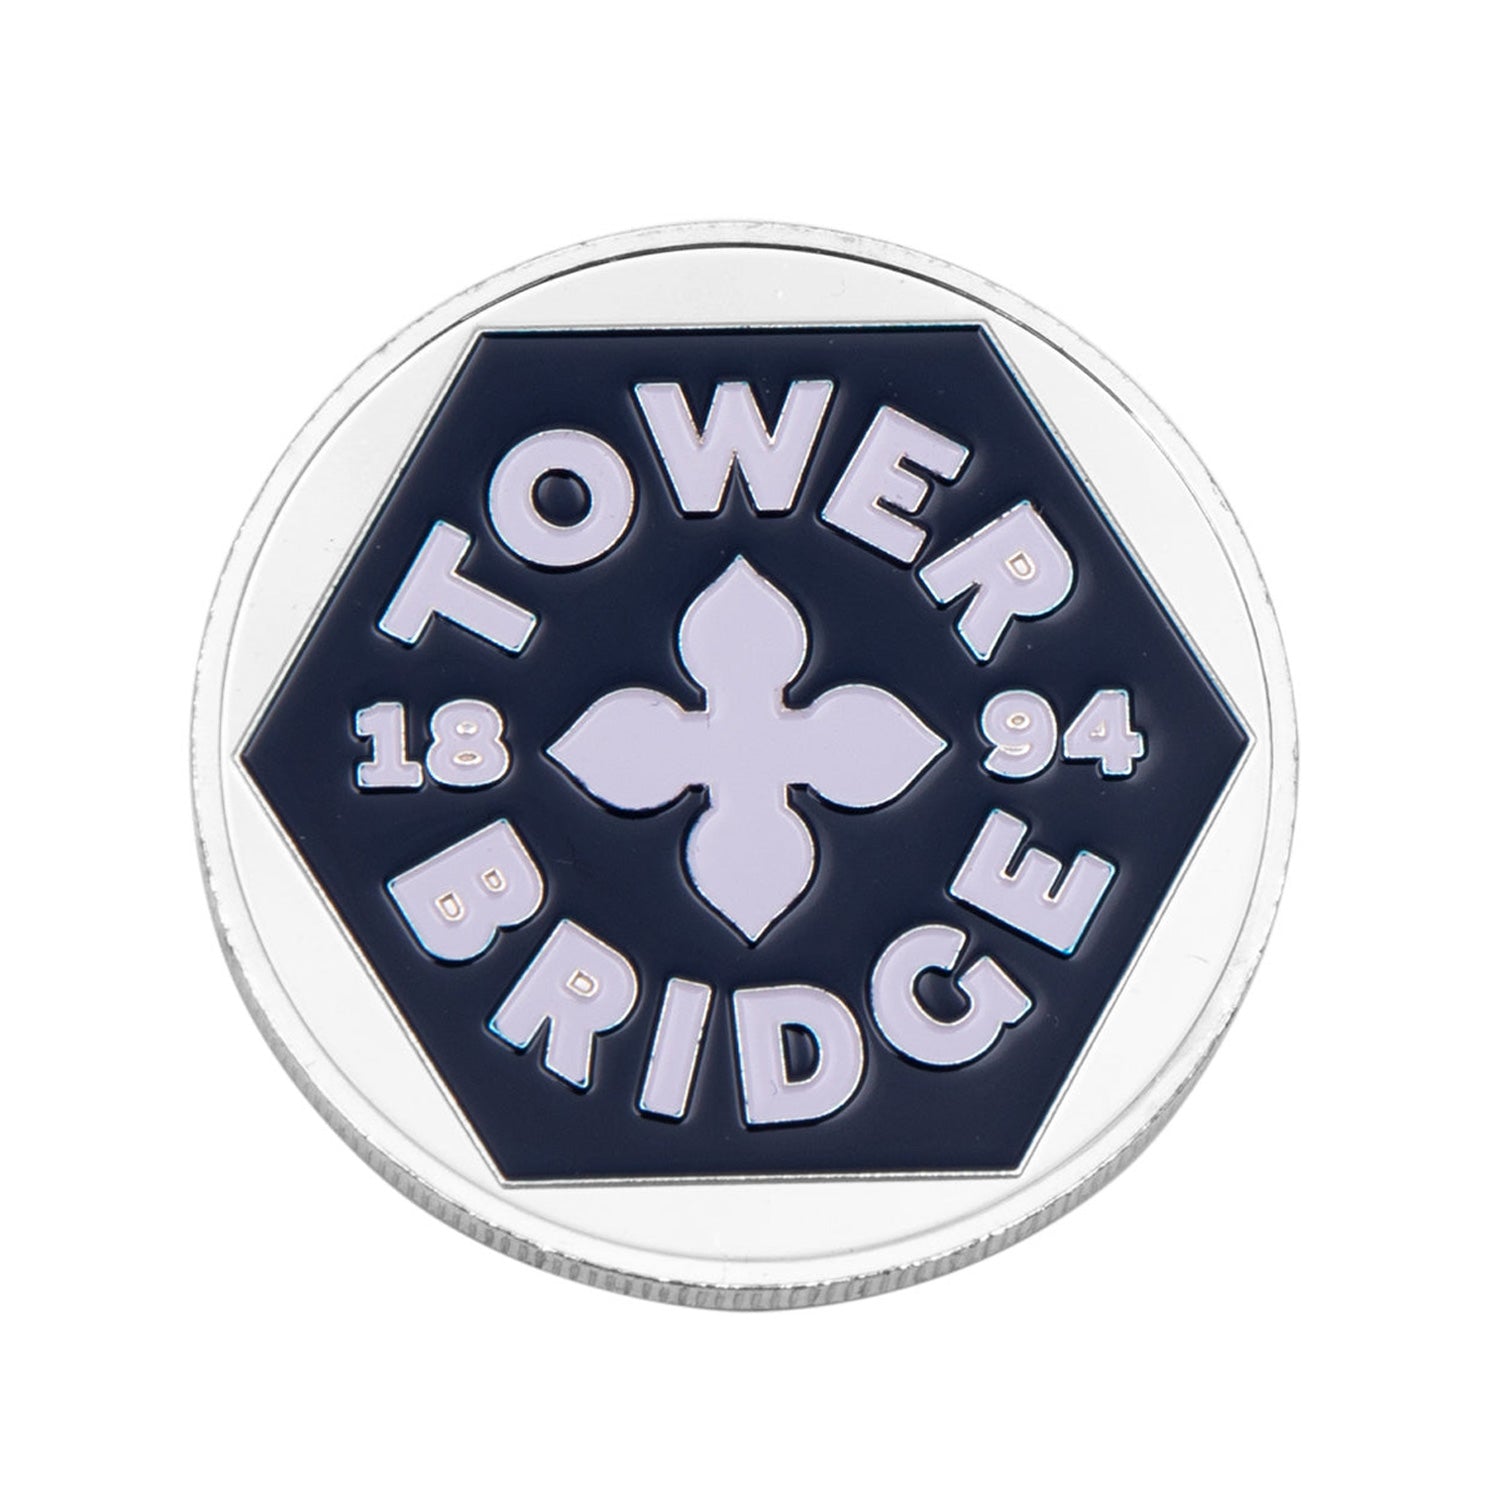 Tower Bridge Silver Medal Coin 2